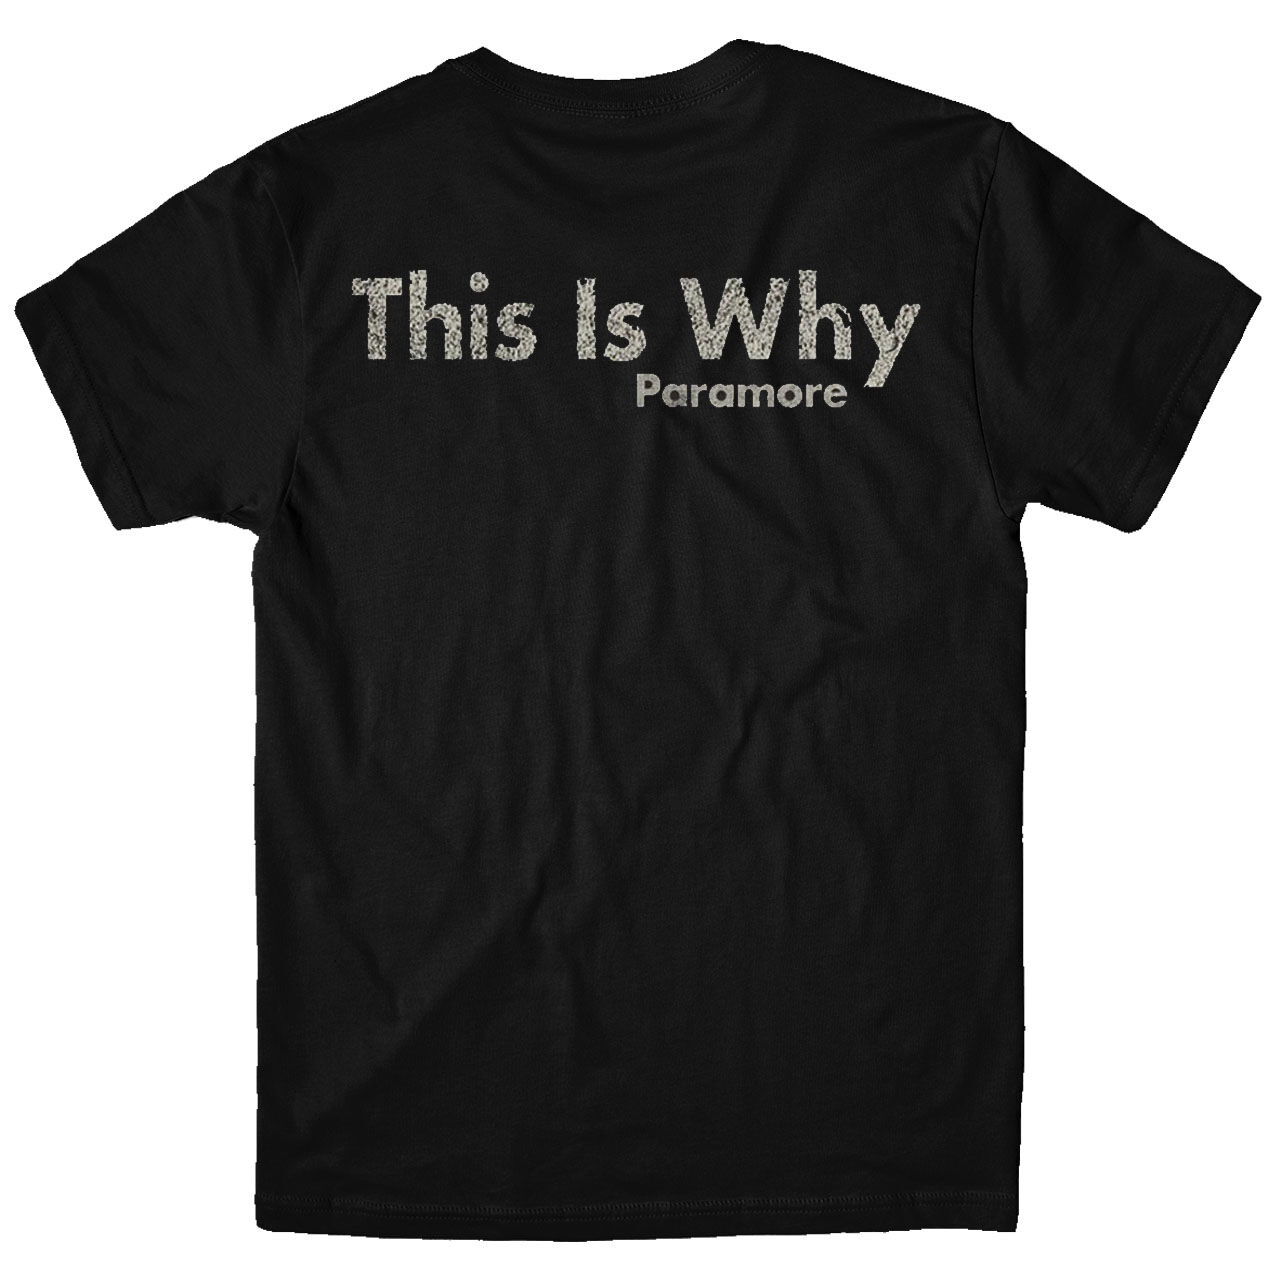 Paramore T-Shirt Dress